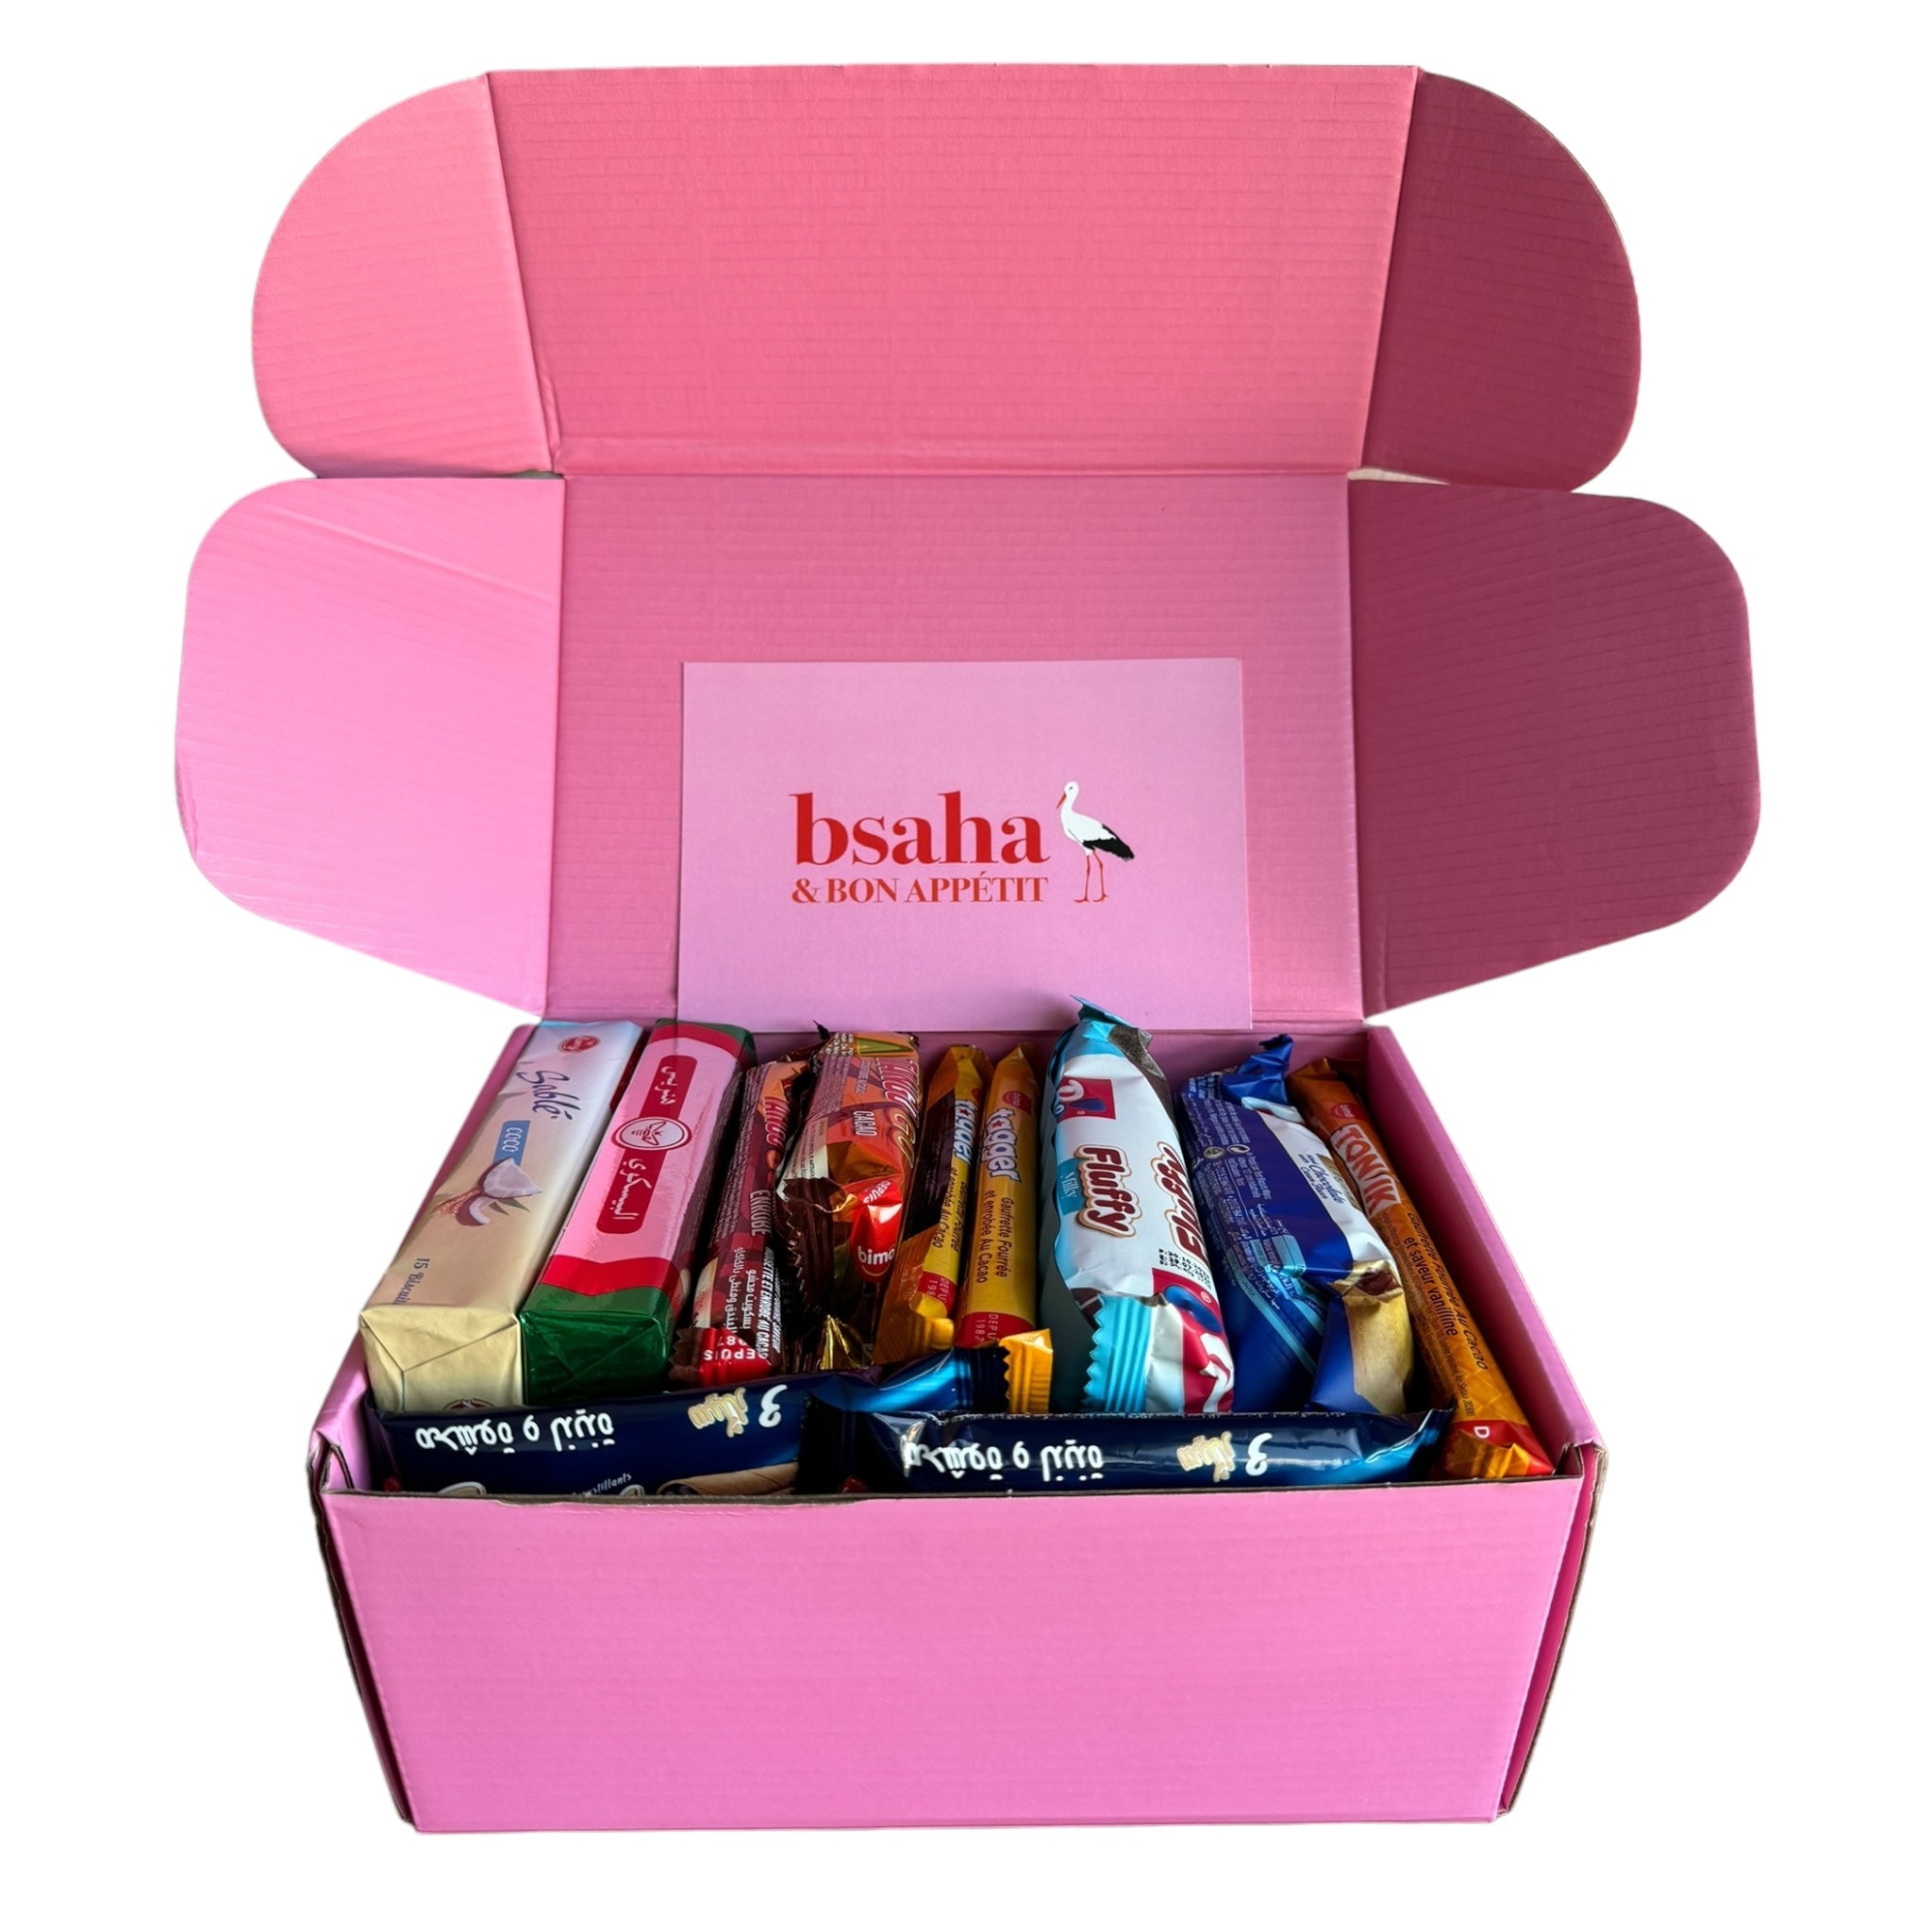 Bsaha Gift Box - A Moroccan Treat Box